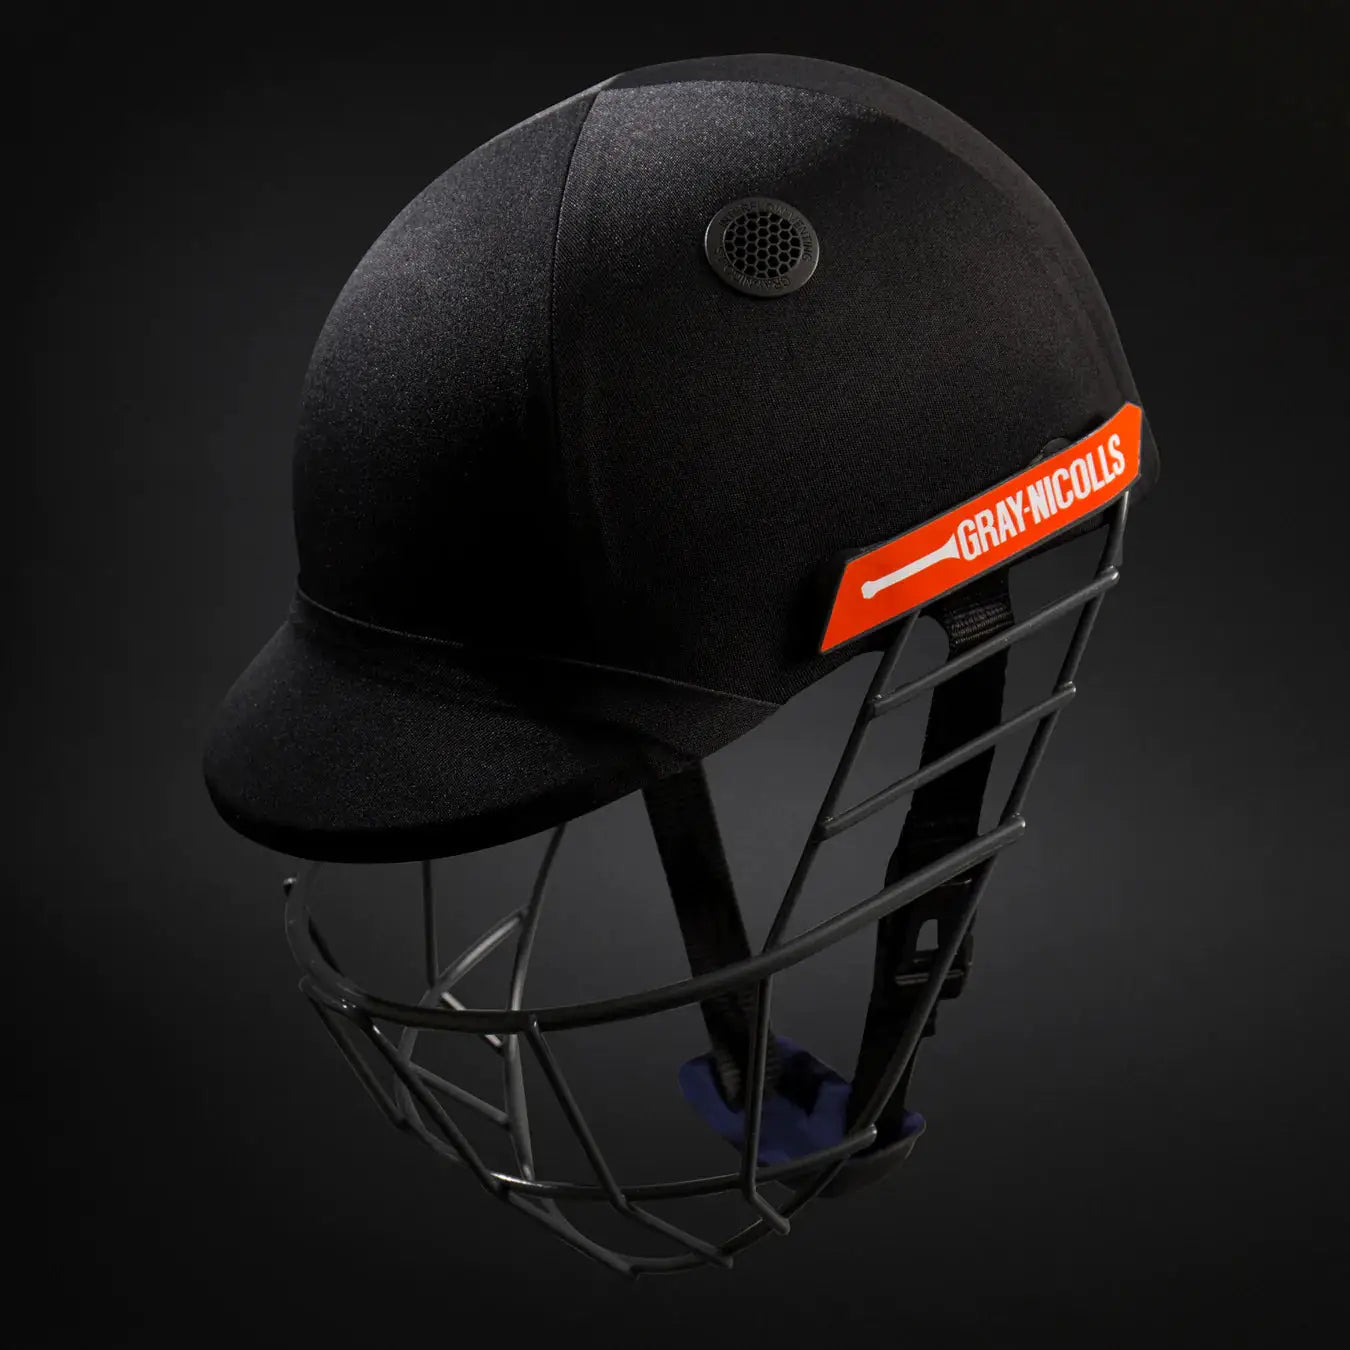 Gray Nicolls Atomic Cricket Helmet - Lightweight Maximum Protection - Medium / Black - HELMETS & HEADGEAR